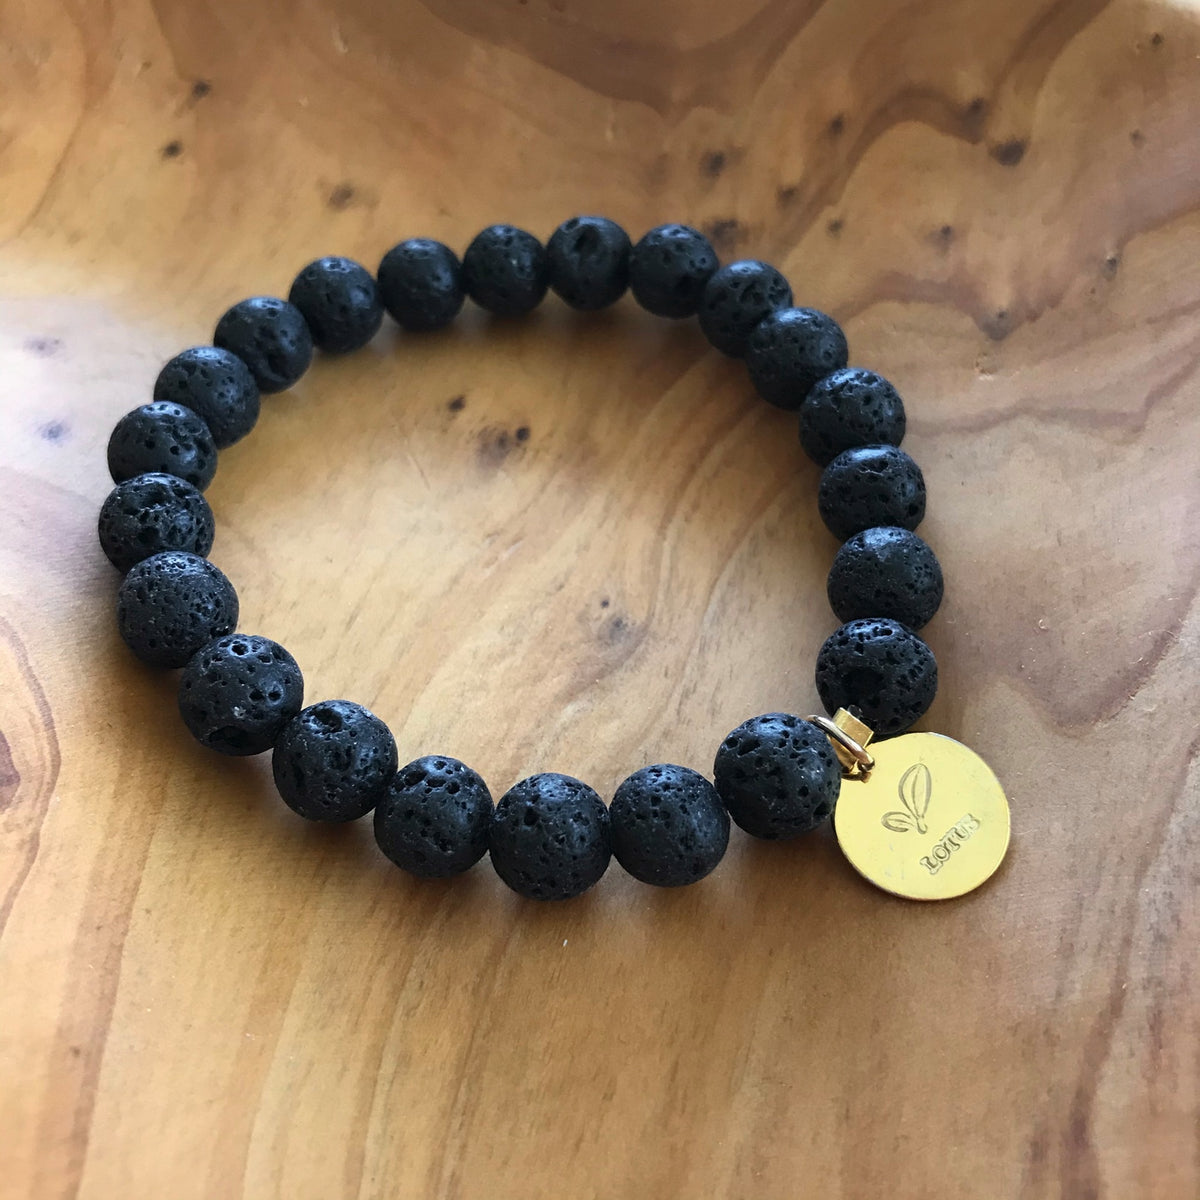 Black Lava Rock Essential Oil Aromatherapy Bracelet with Gold Charm by Lotus Jewelry Studio